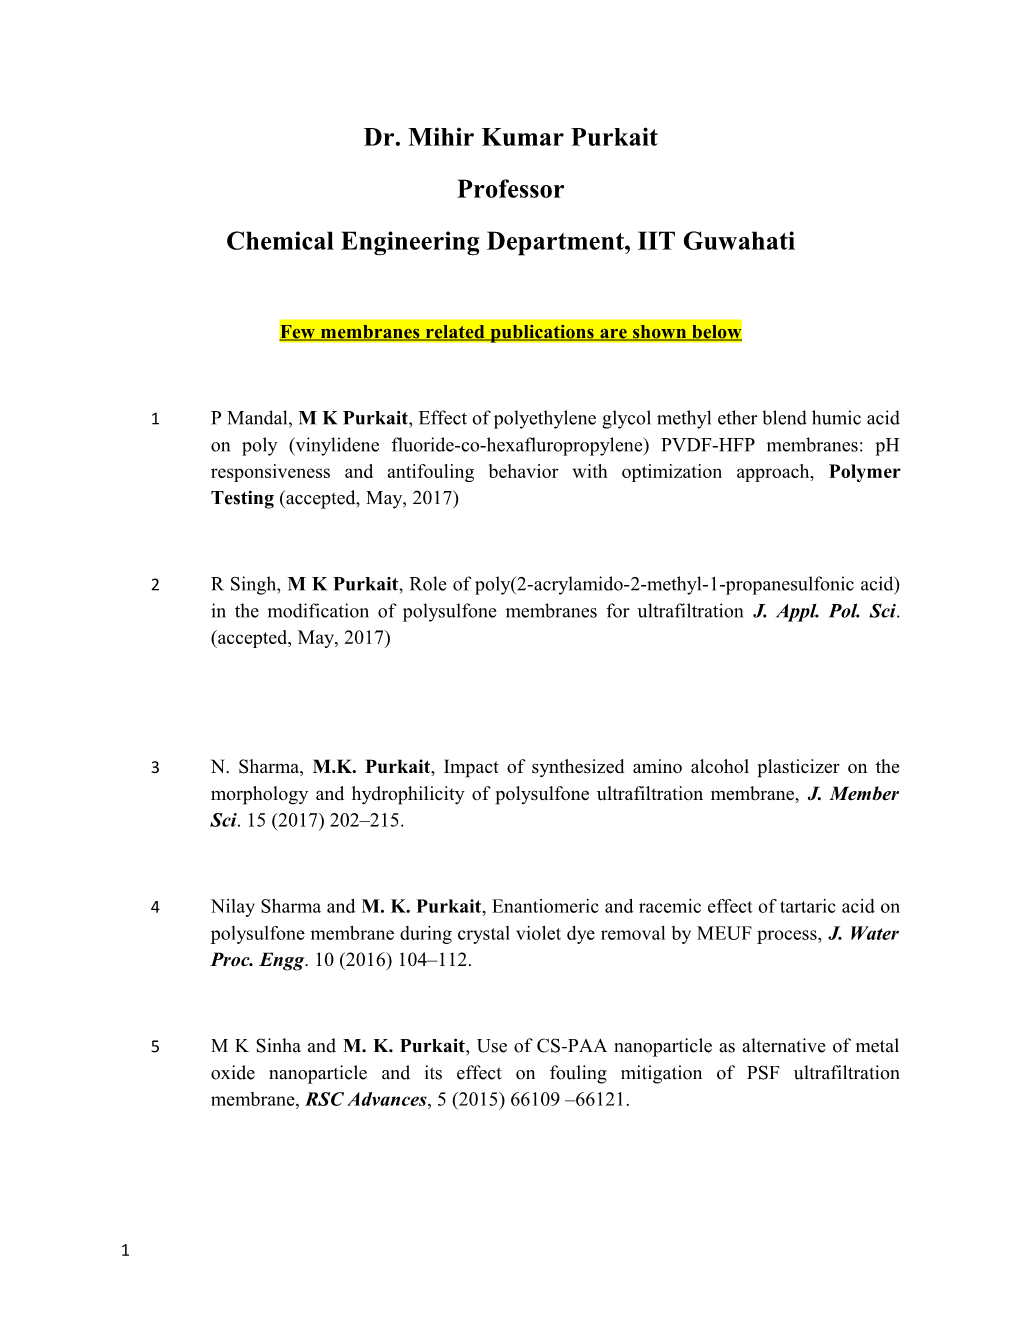 Chemical Engineering Department, IIT Guwahati